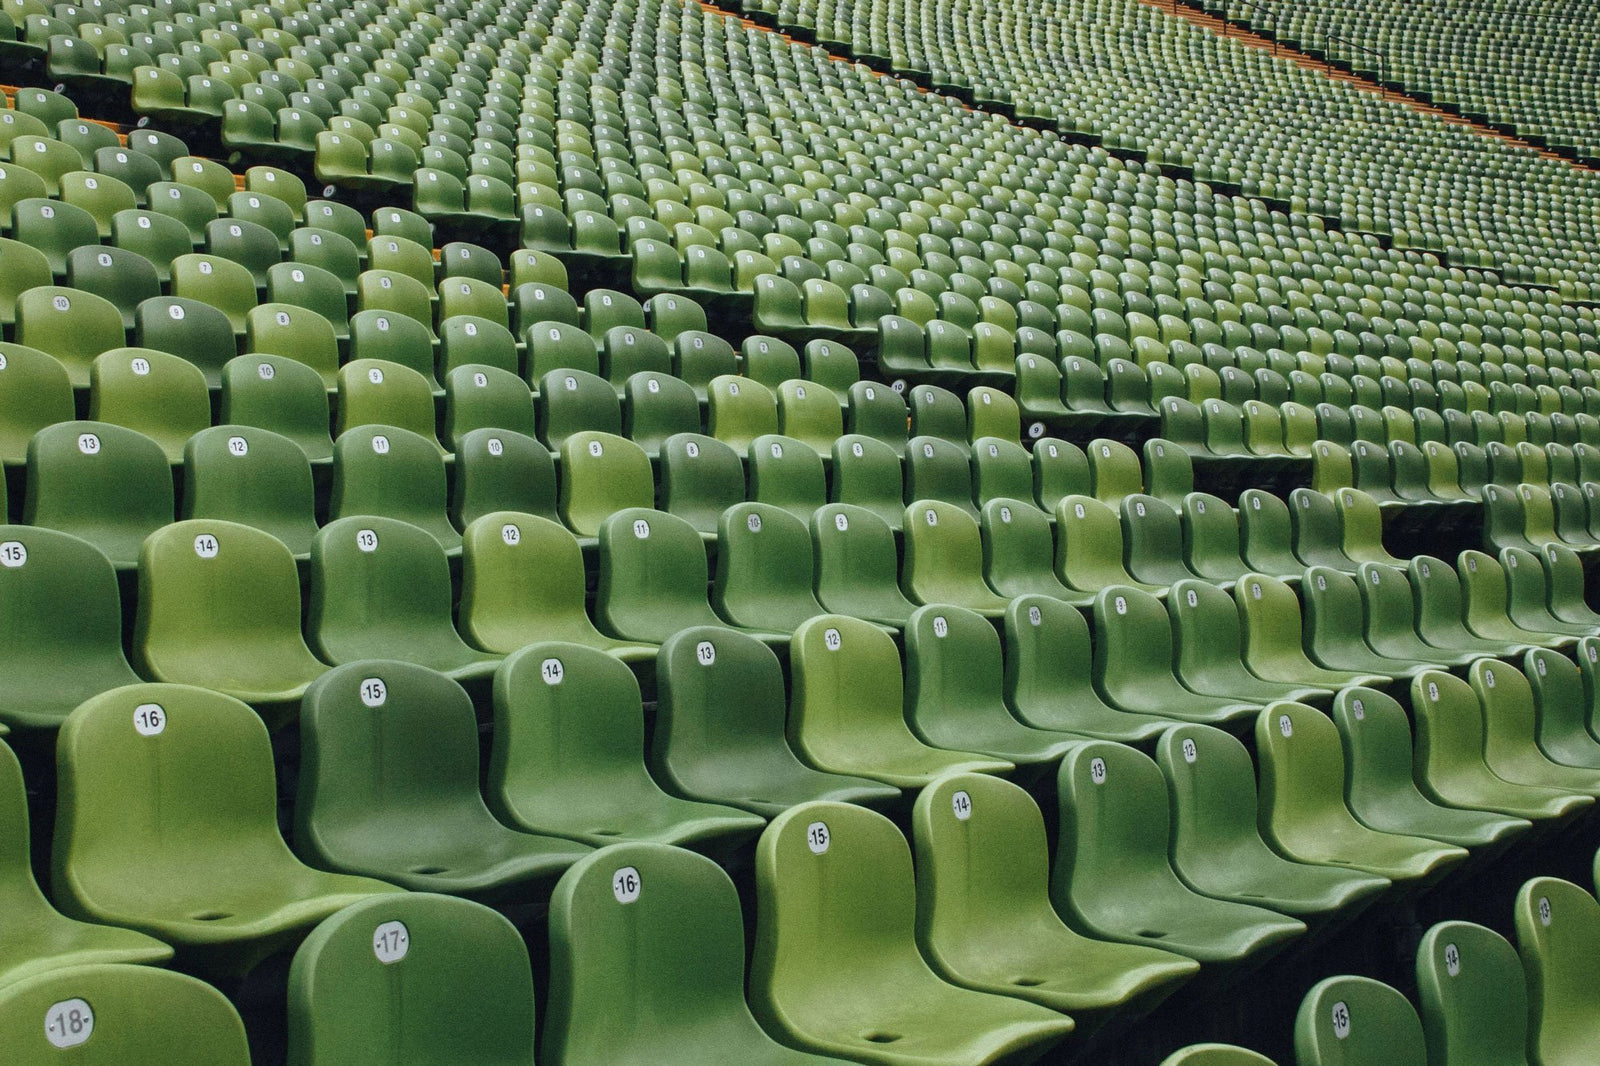 Best Stadium Seat Cushions, Bleacher Chairs -NiceC